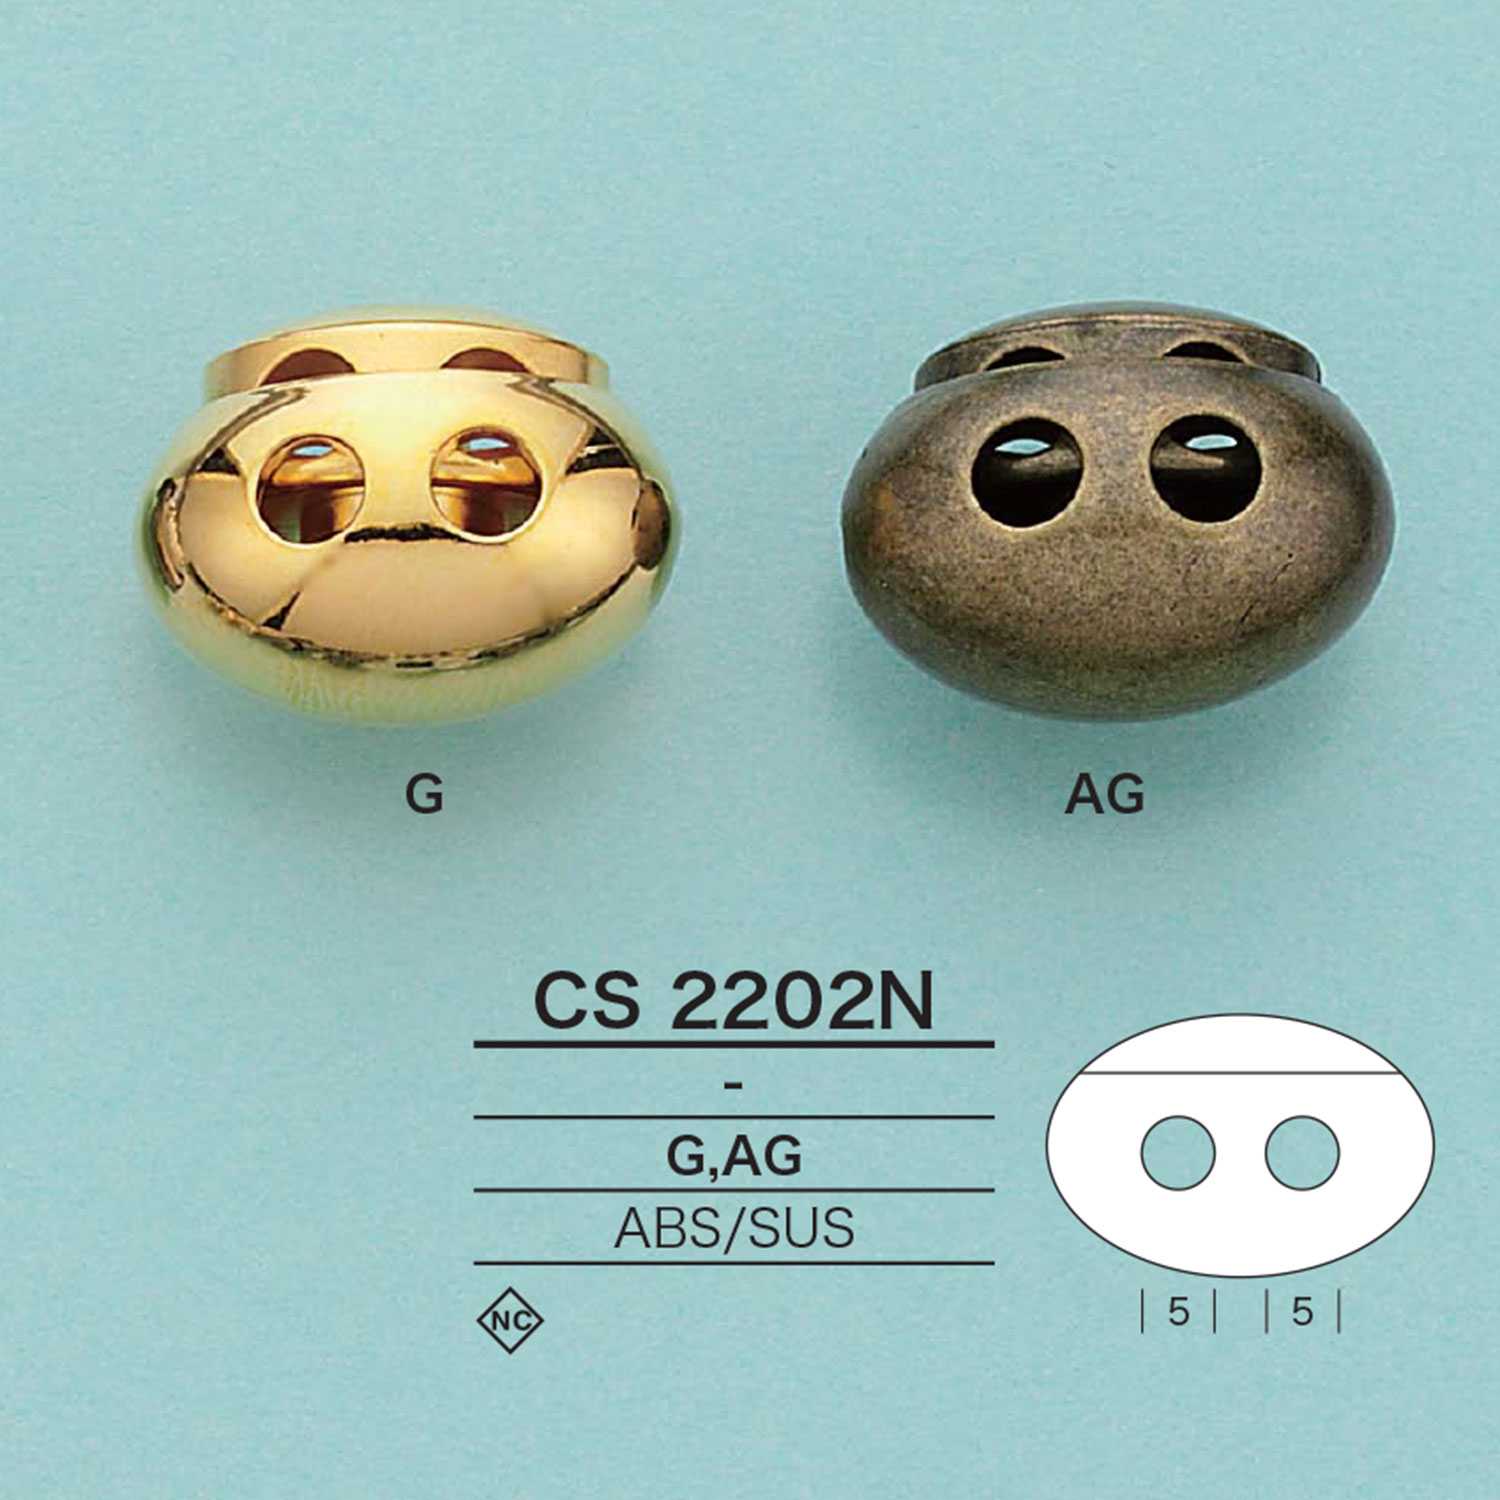 CS2202N 椭圆绳子锁[扣和环] 爱丽丝纽扣